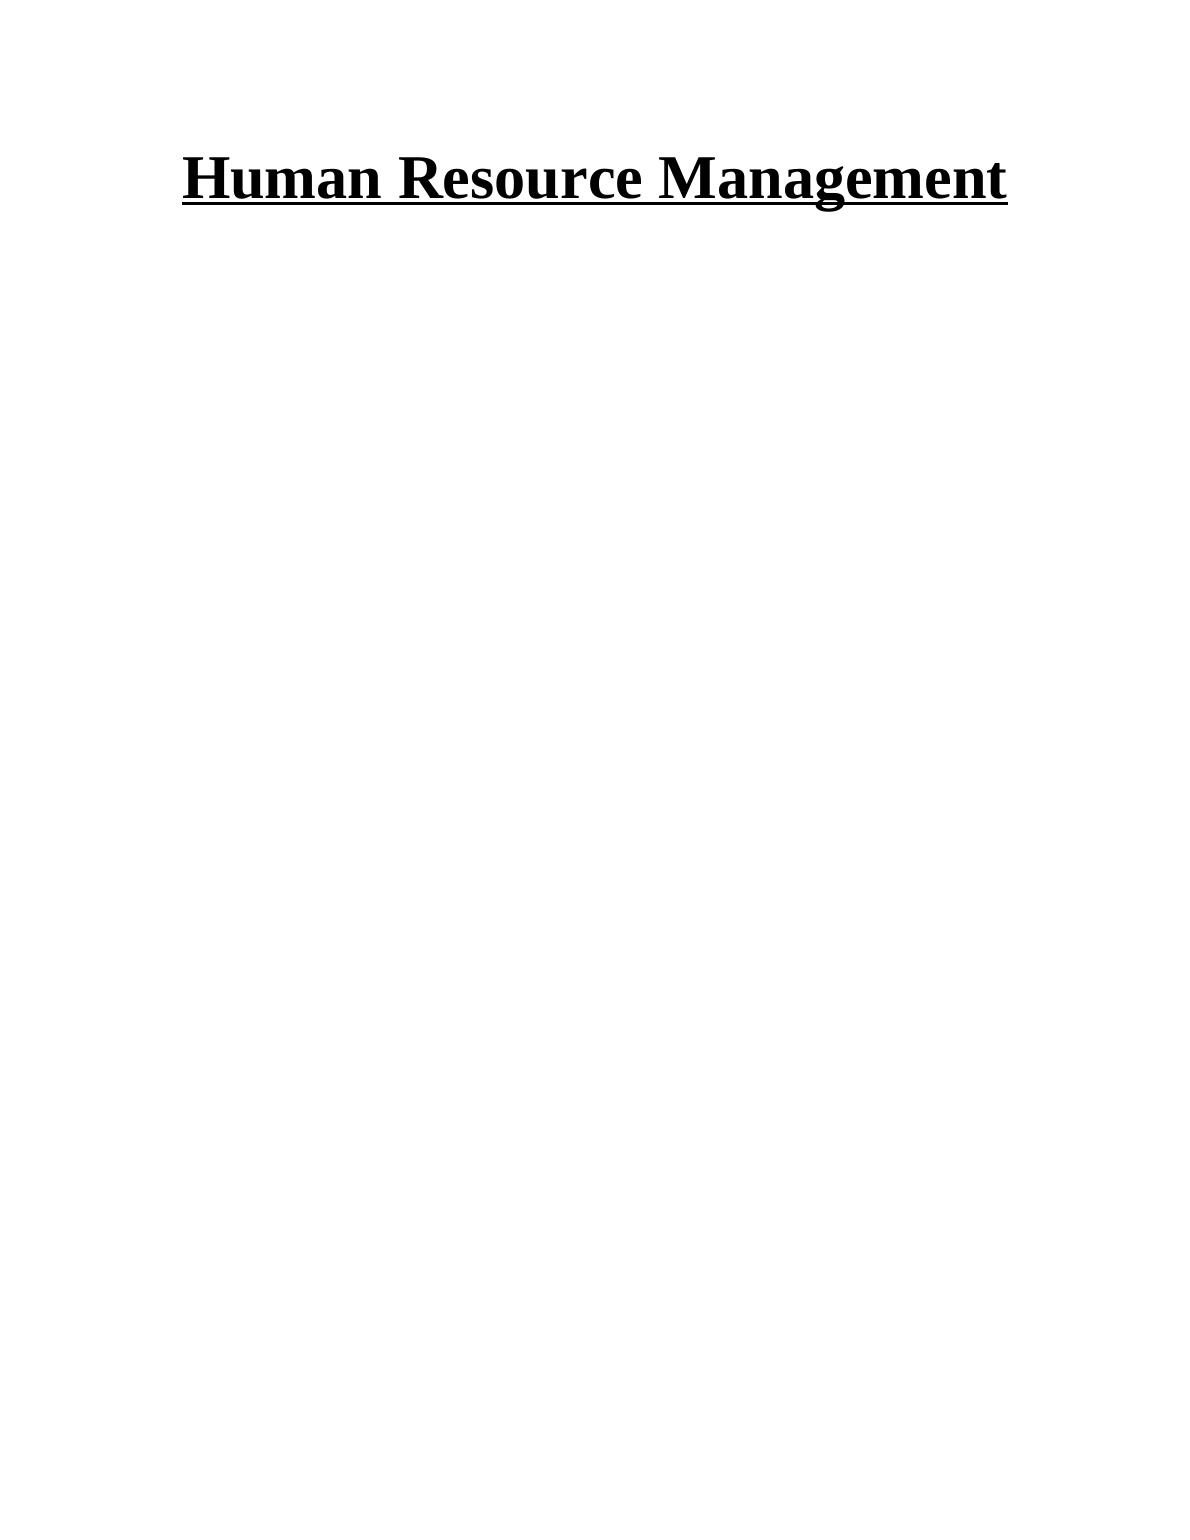 Human Resource Management at Morrisons_1